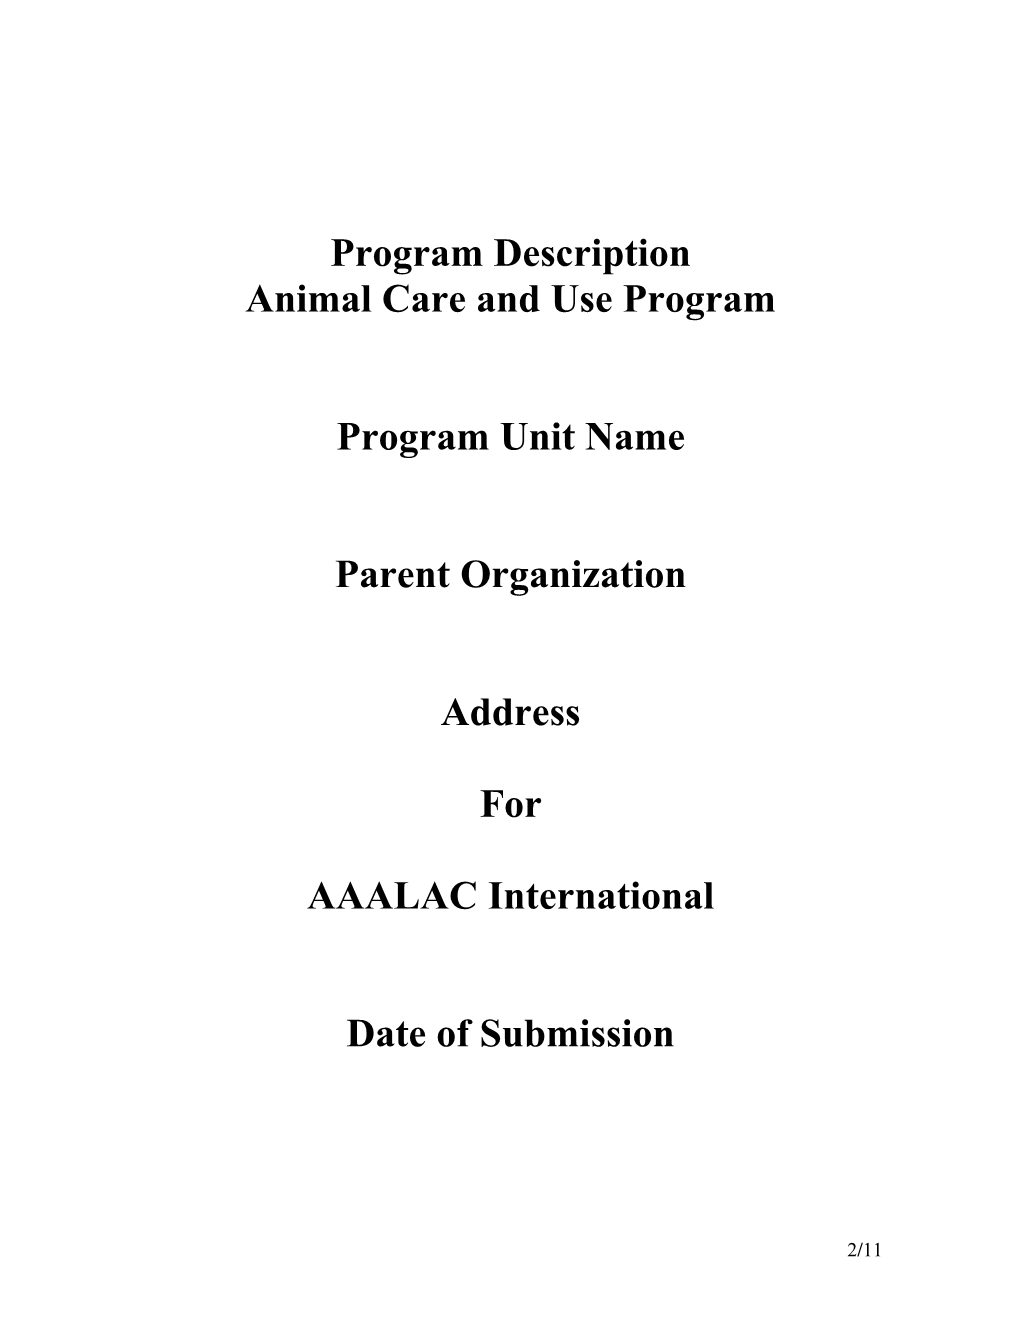 Animal Care and Use Program